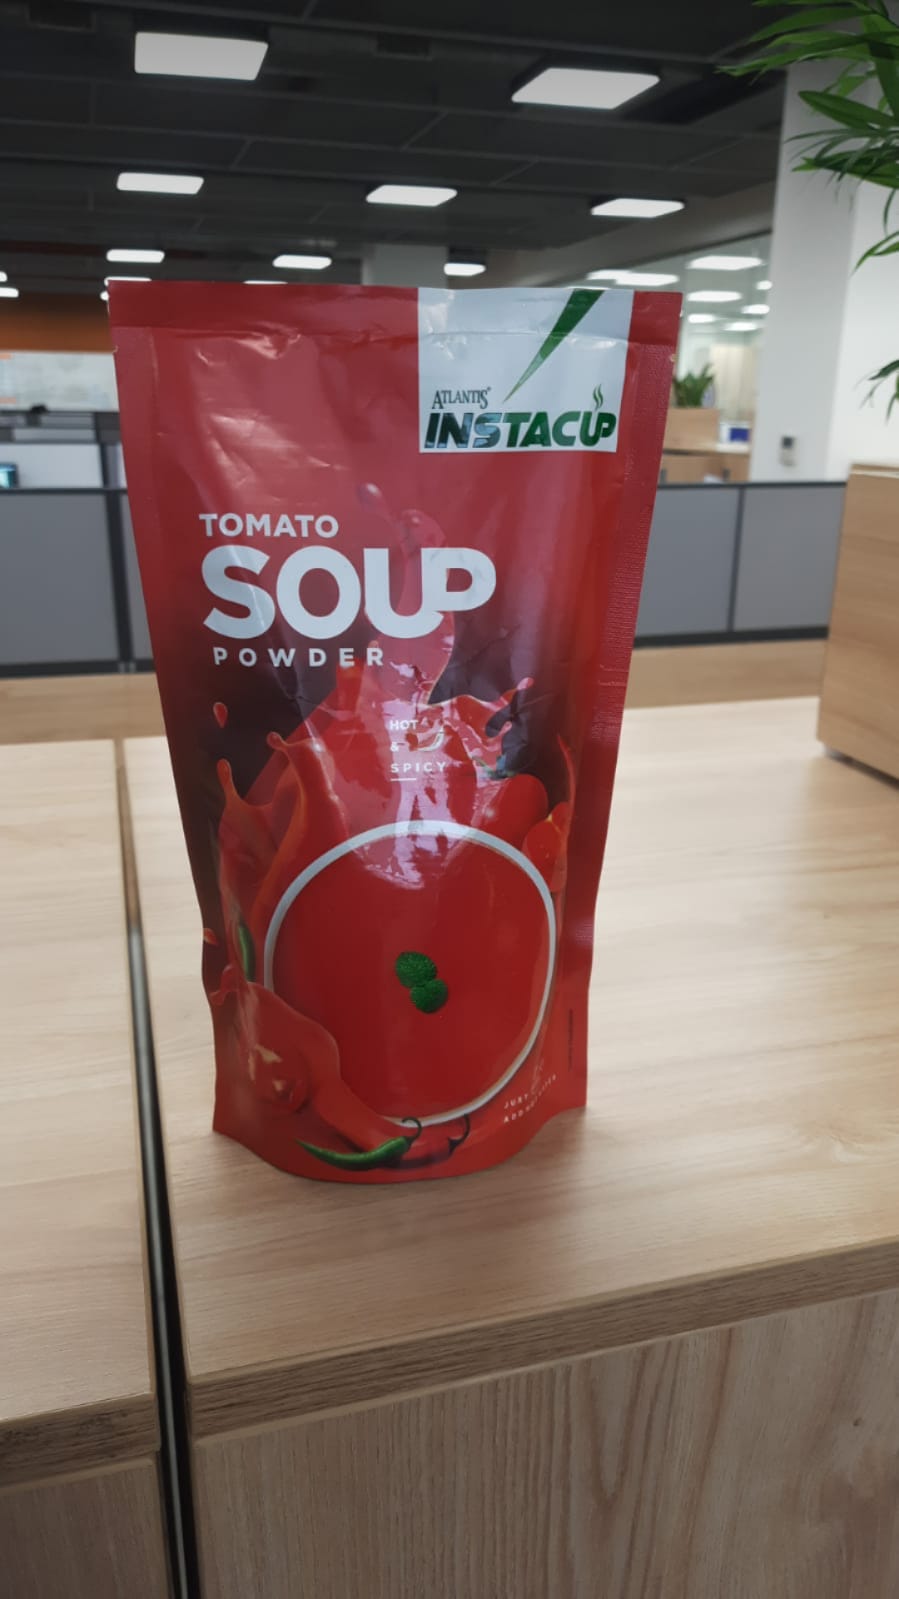 Atlantis Instacup Tomato Soup